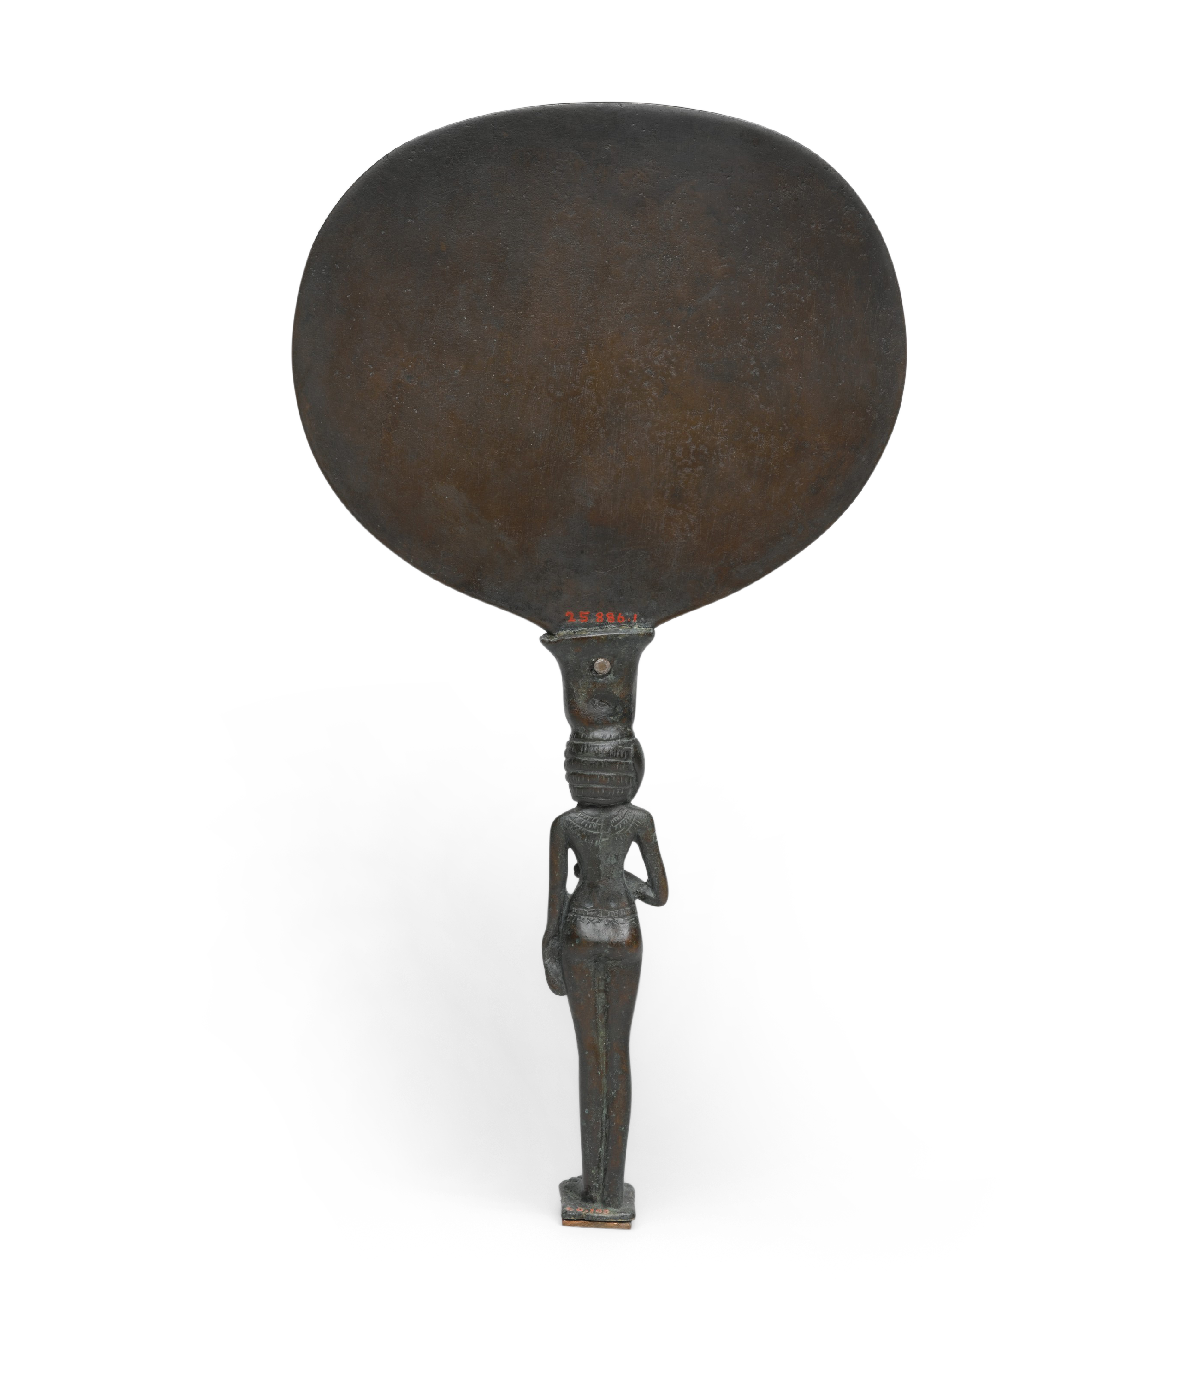 Mirror Disk, ca. 1352–1336 BCE